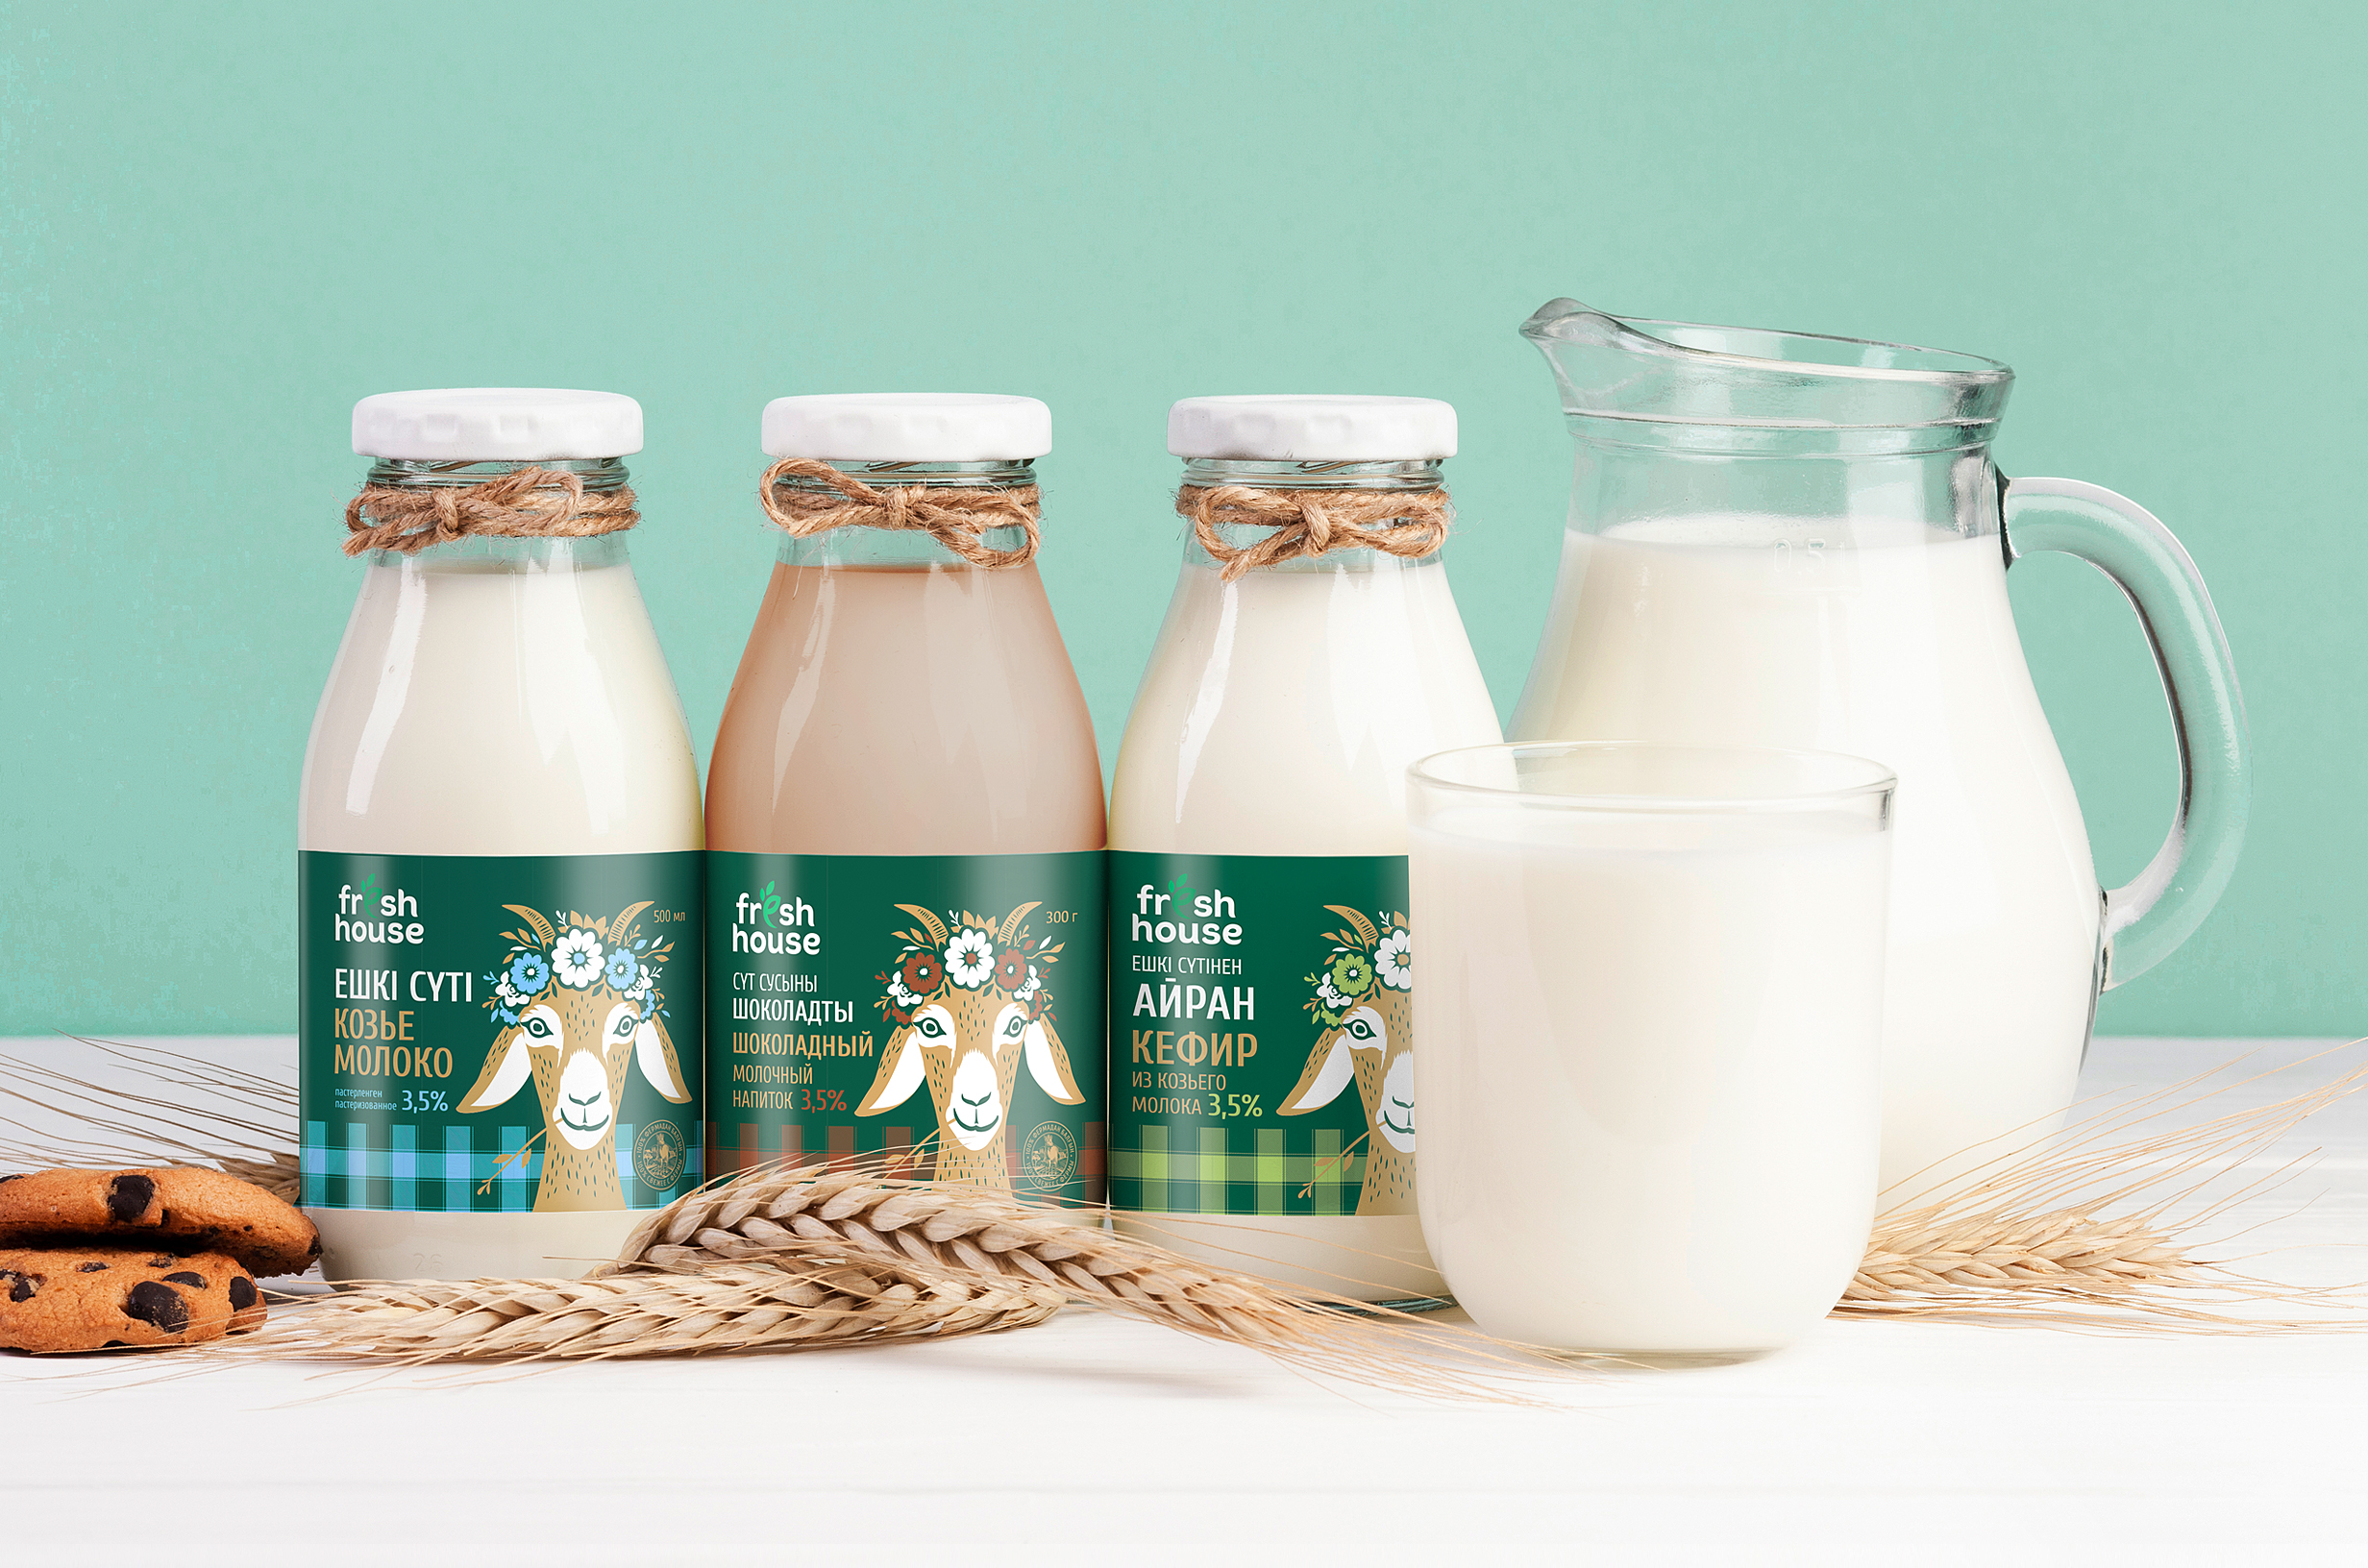 Дизайн молочных продуктов  | Fresh House